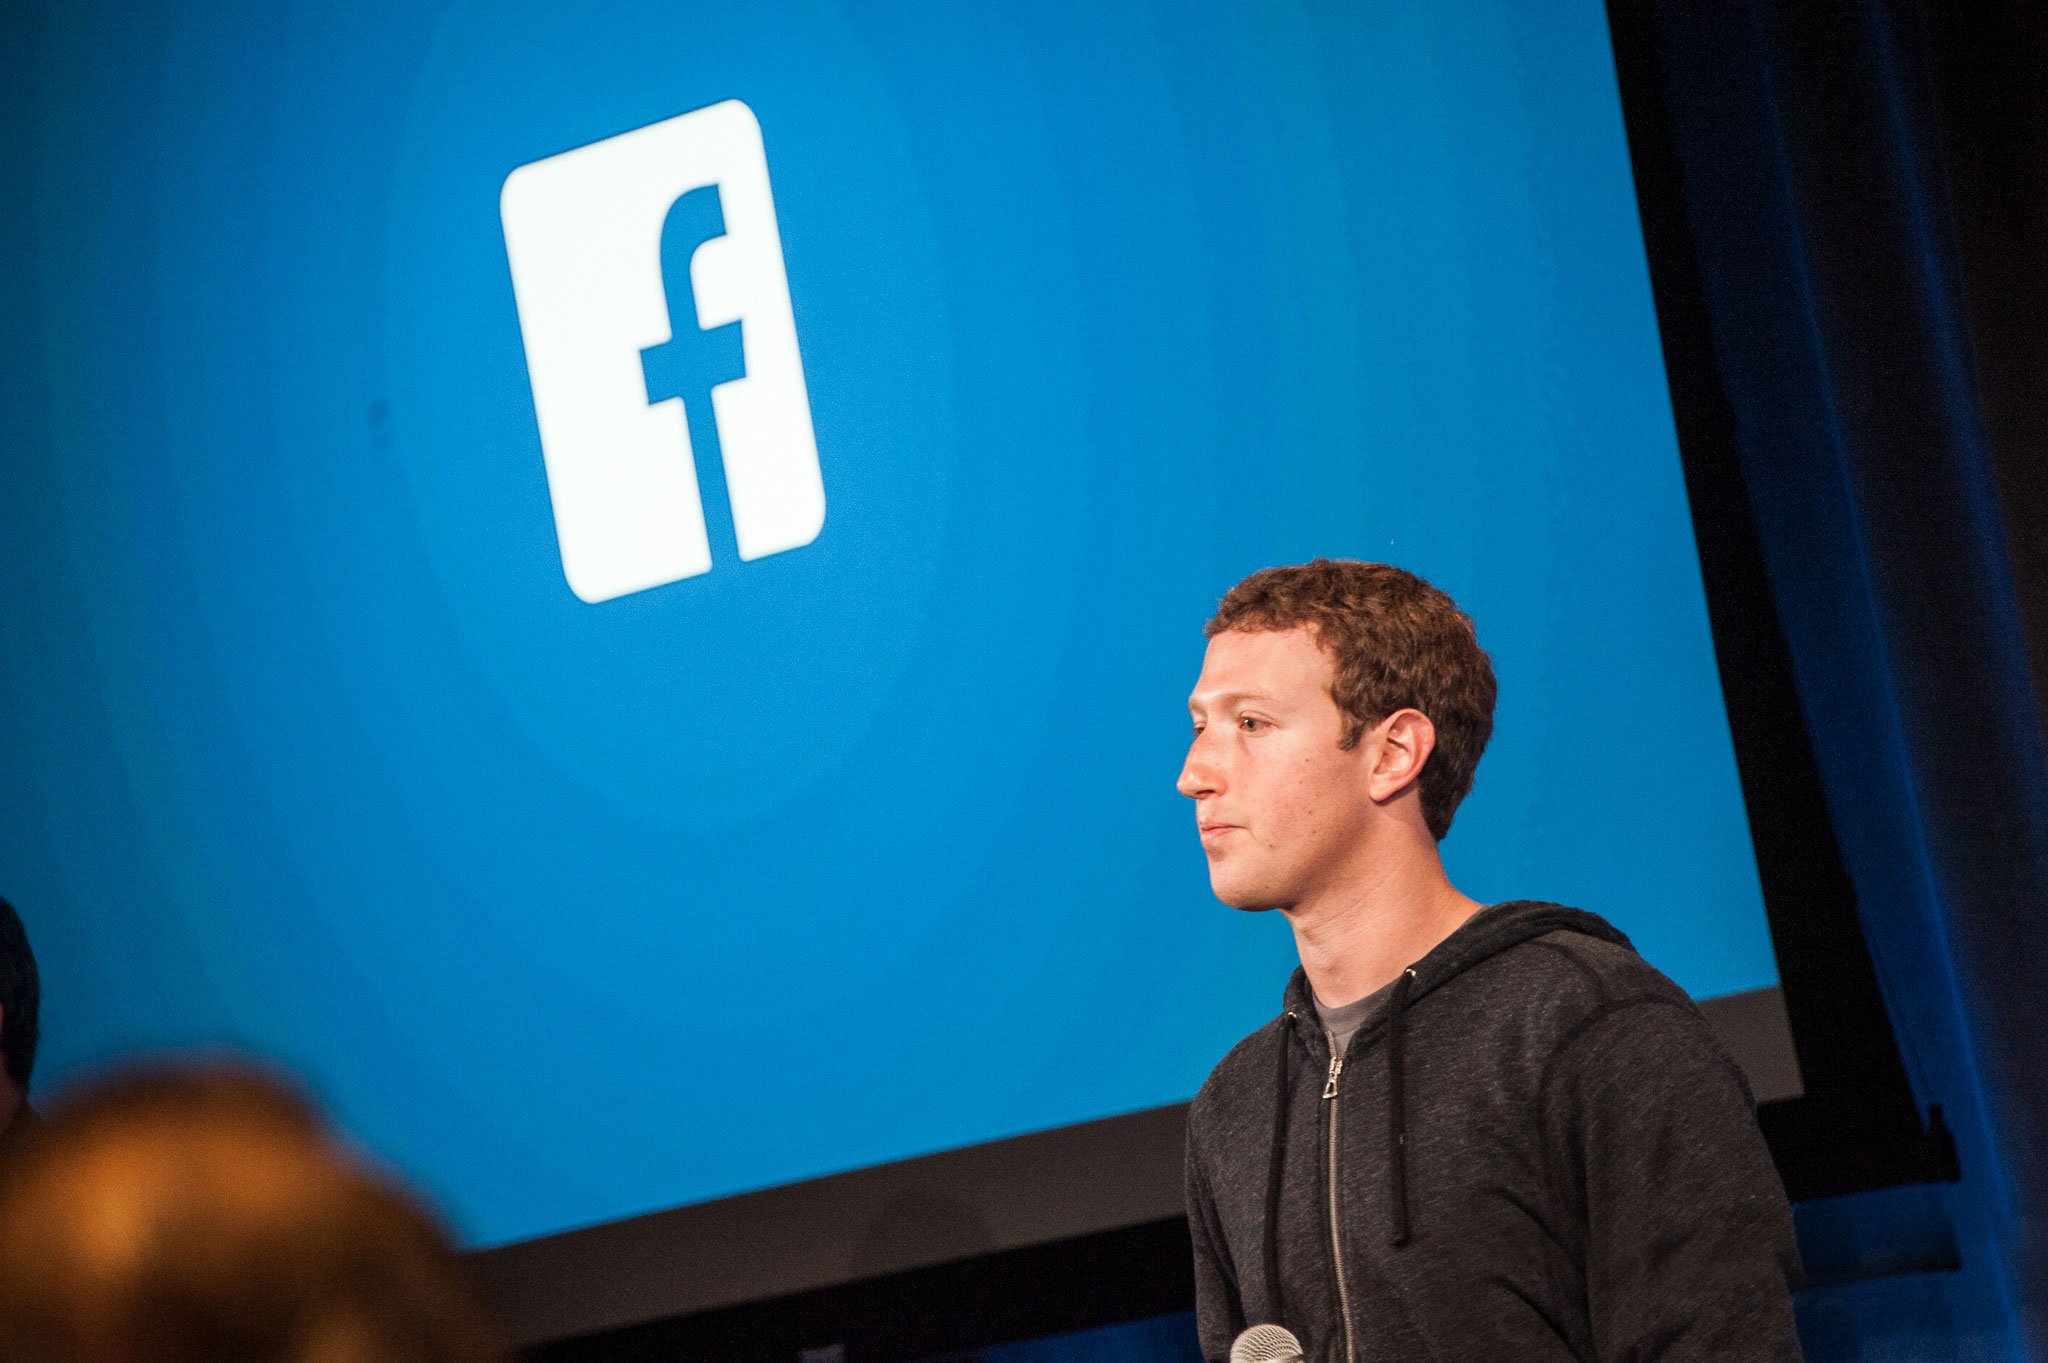 Mark Zuckerberg in front of the Facebook logo